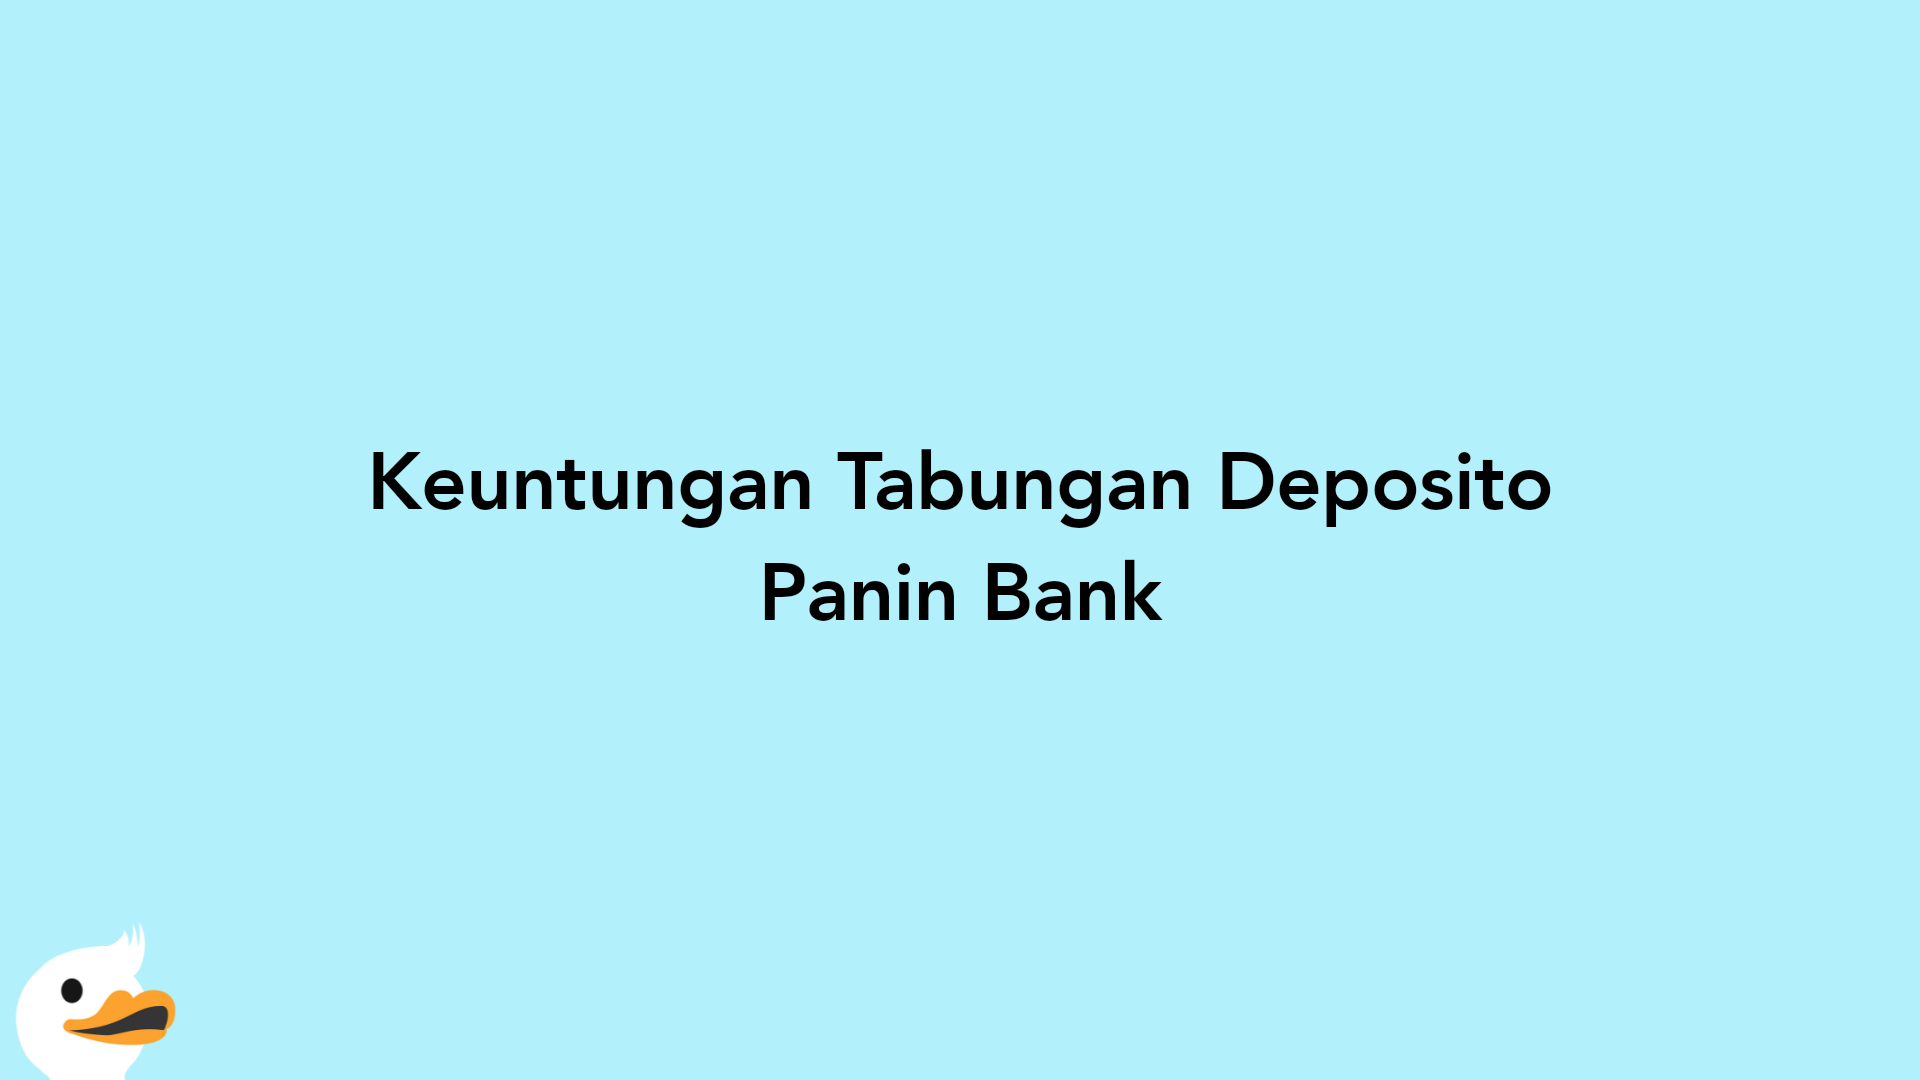 Keuntungan Tabungan Deposito Panin Bank